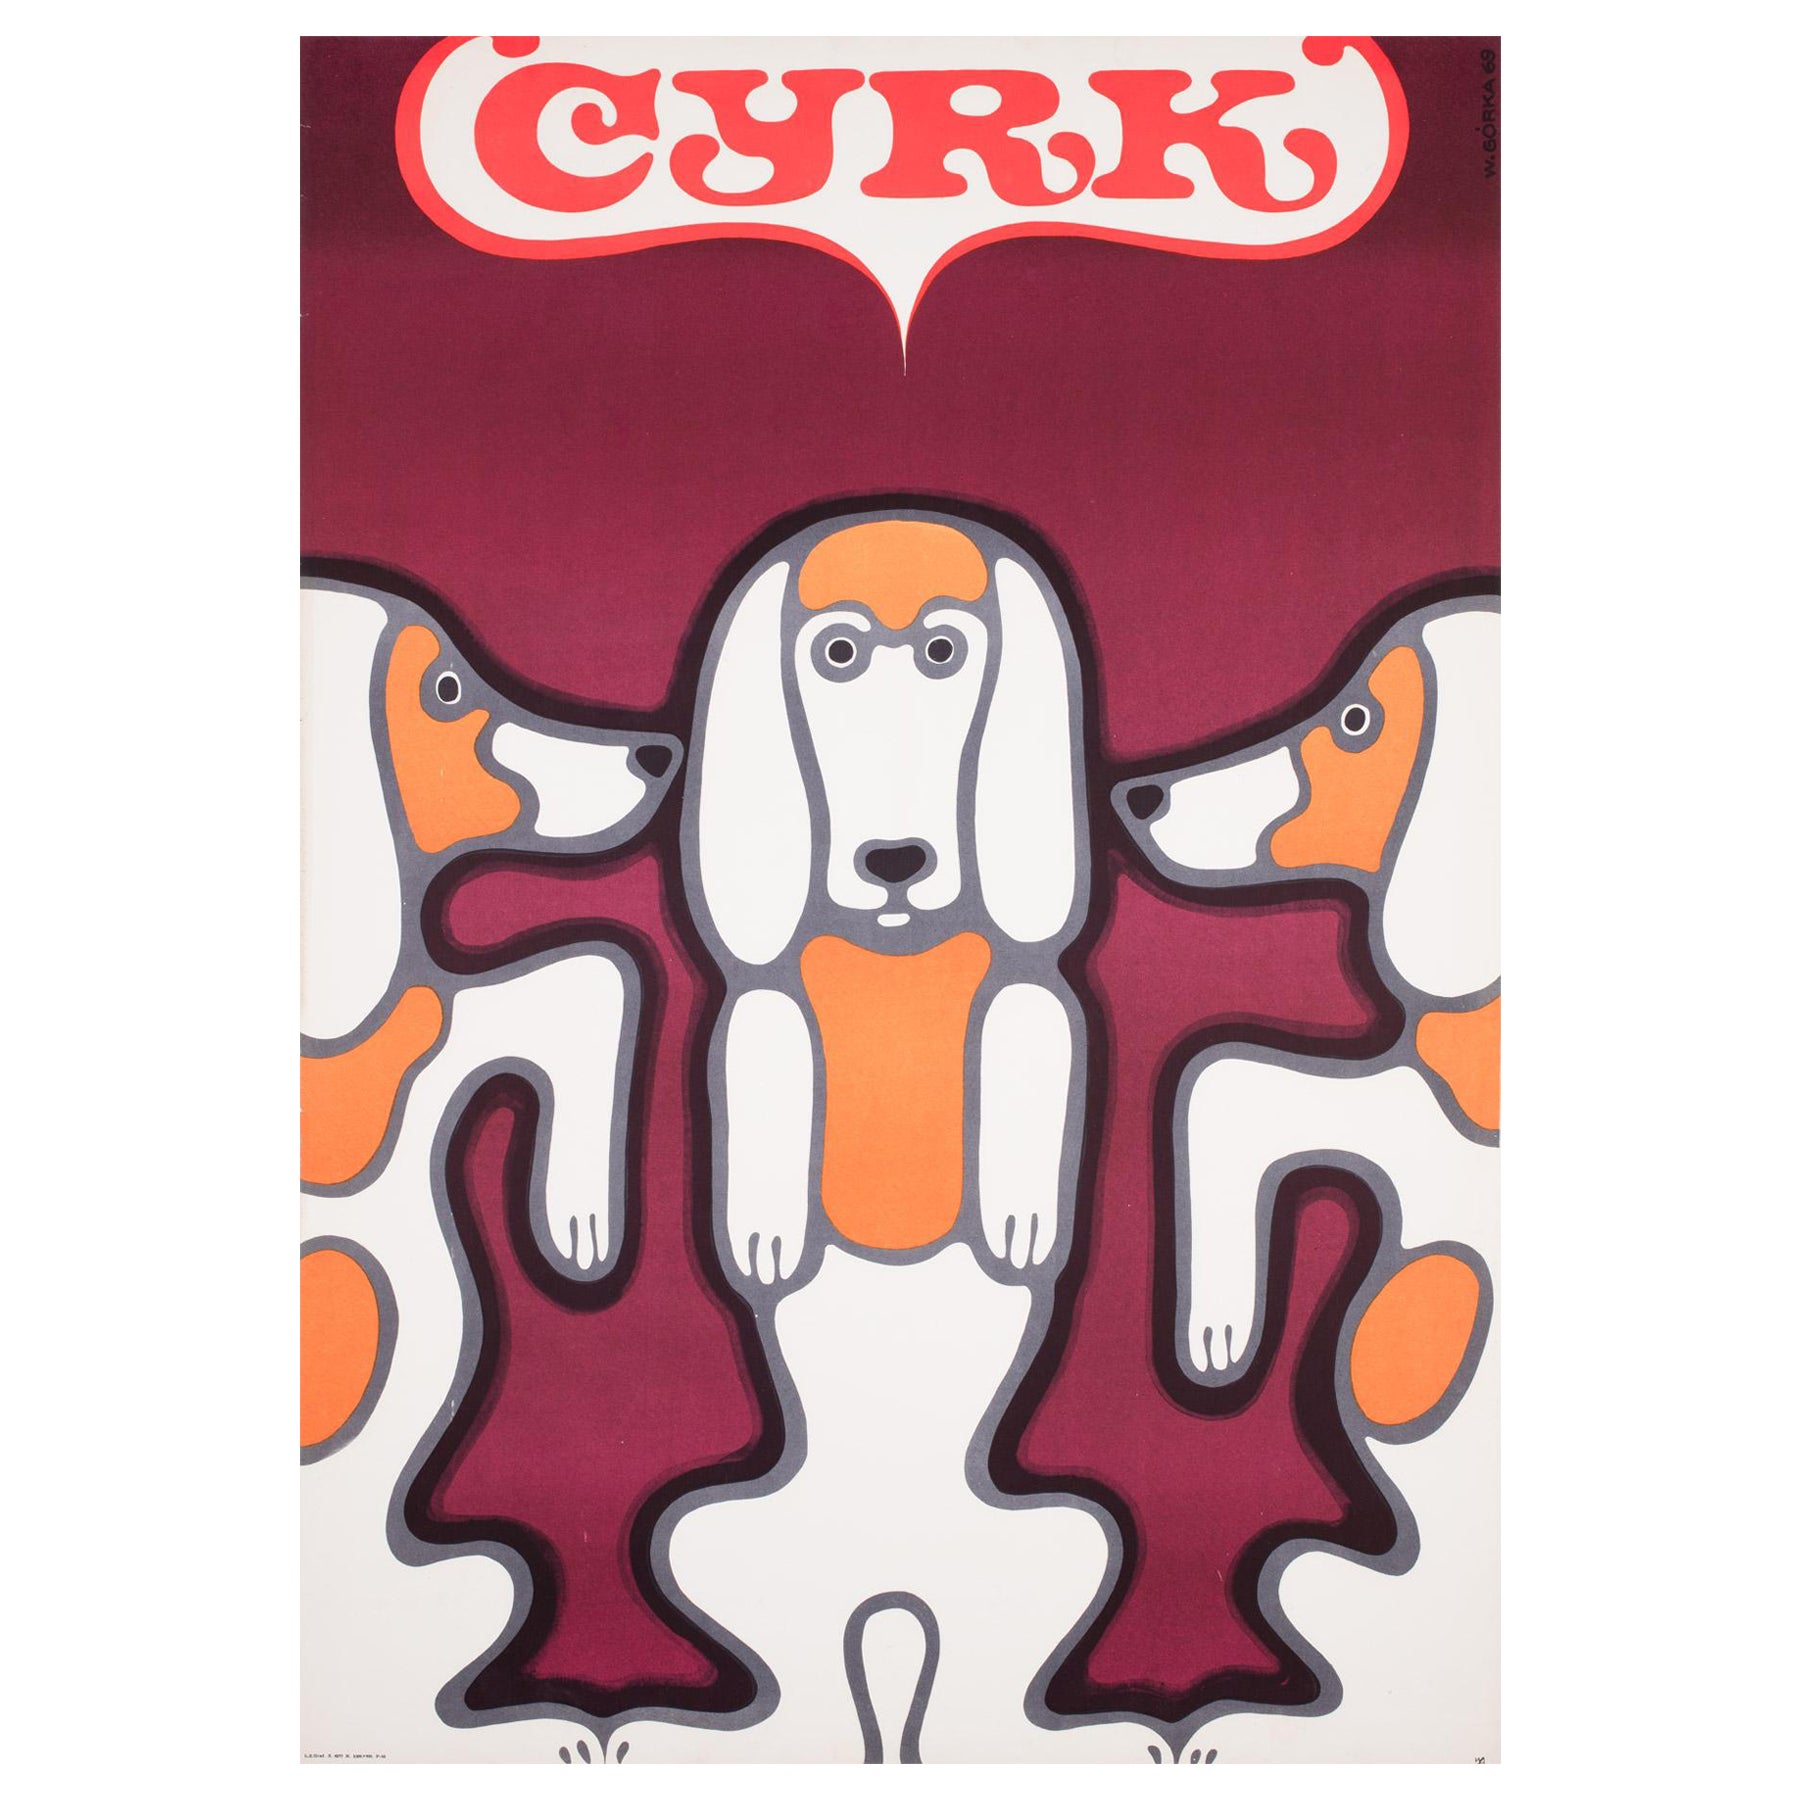 Original 1969 Polish CYRK ‘Circus; Poster, Three Beagles by Gorka For Sale